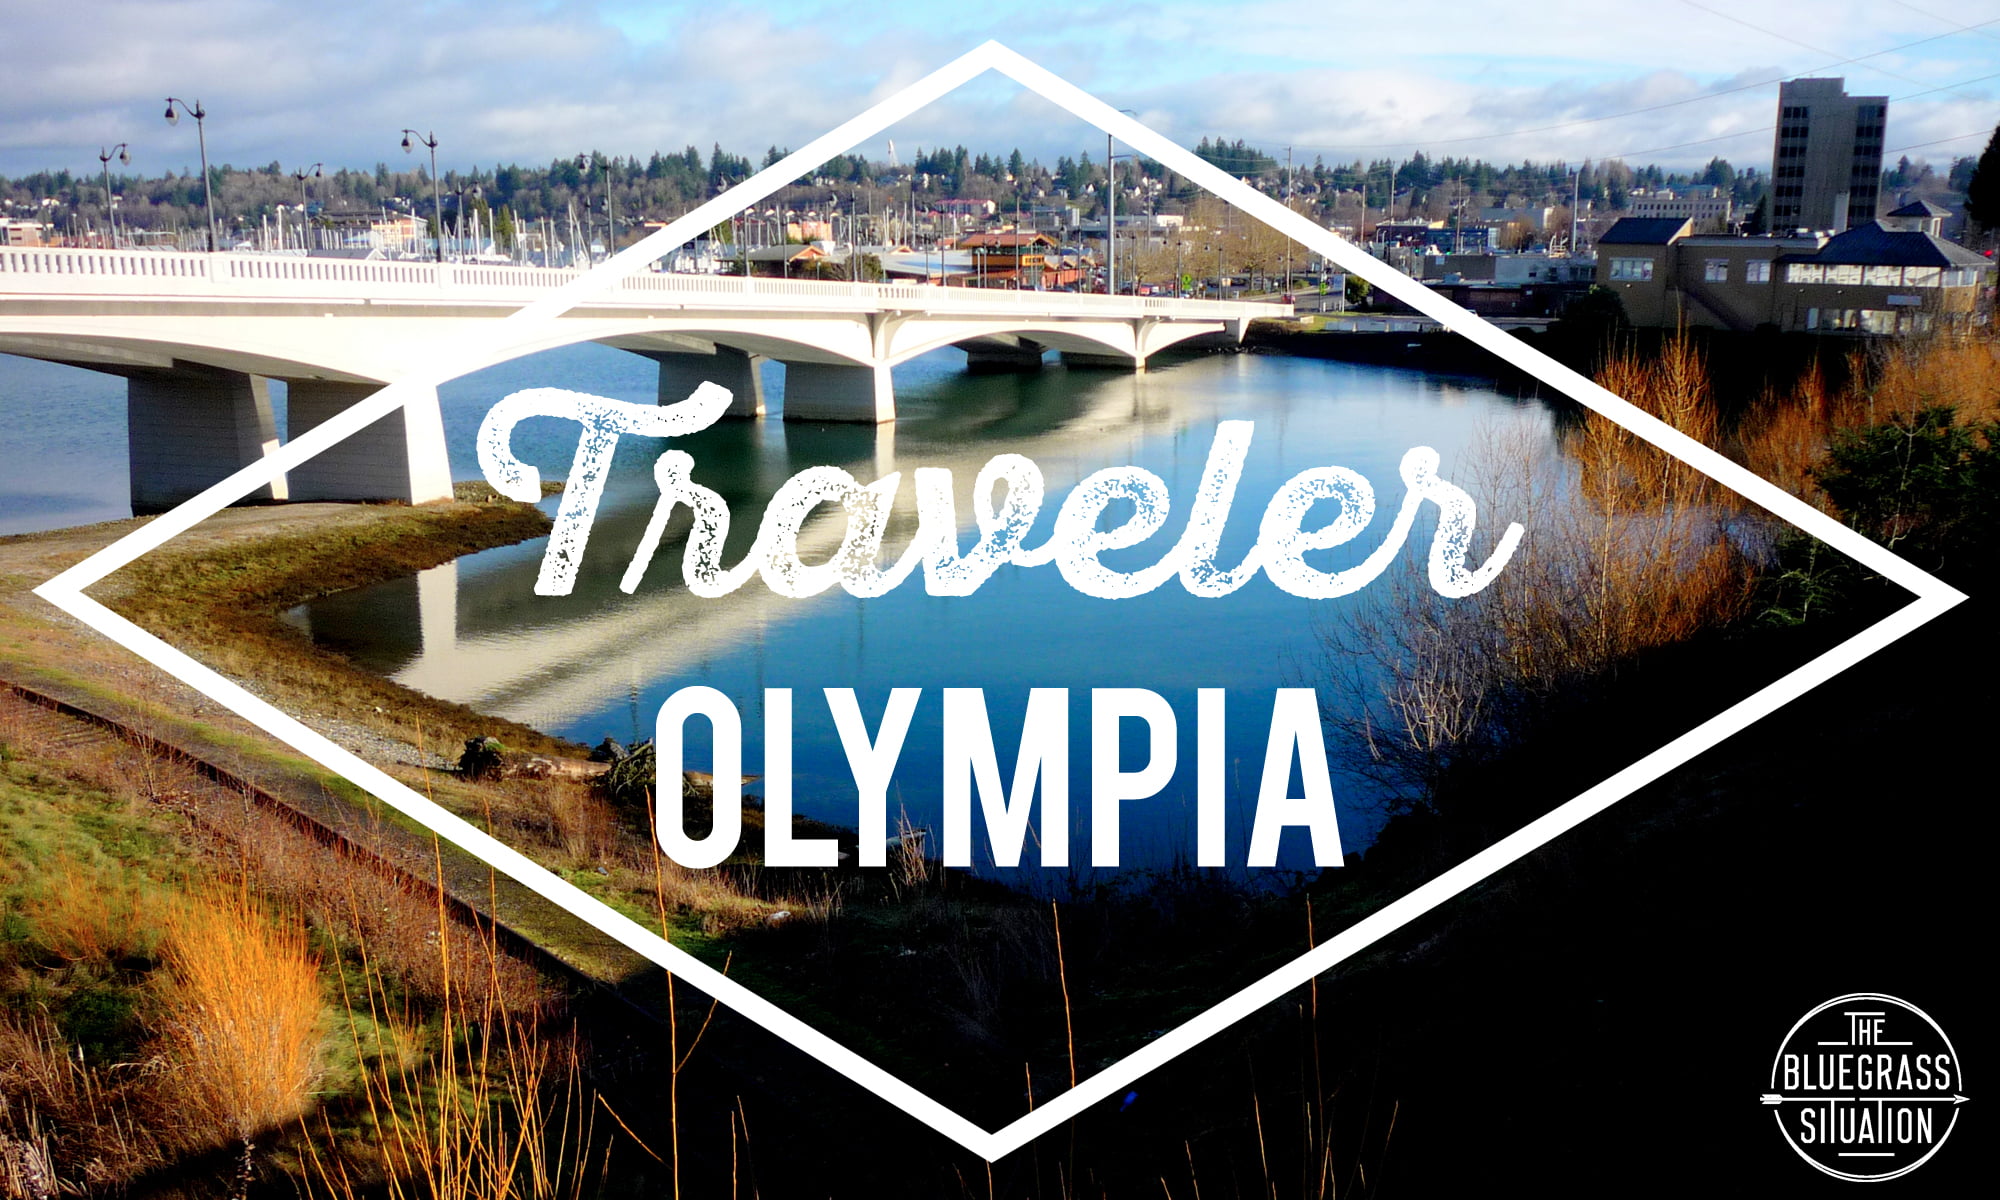 Traveler: Your Guide to Olympia, Washington